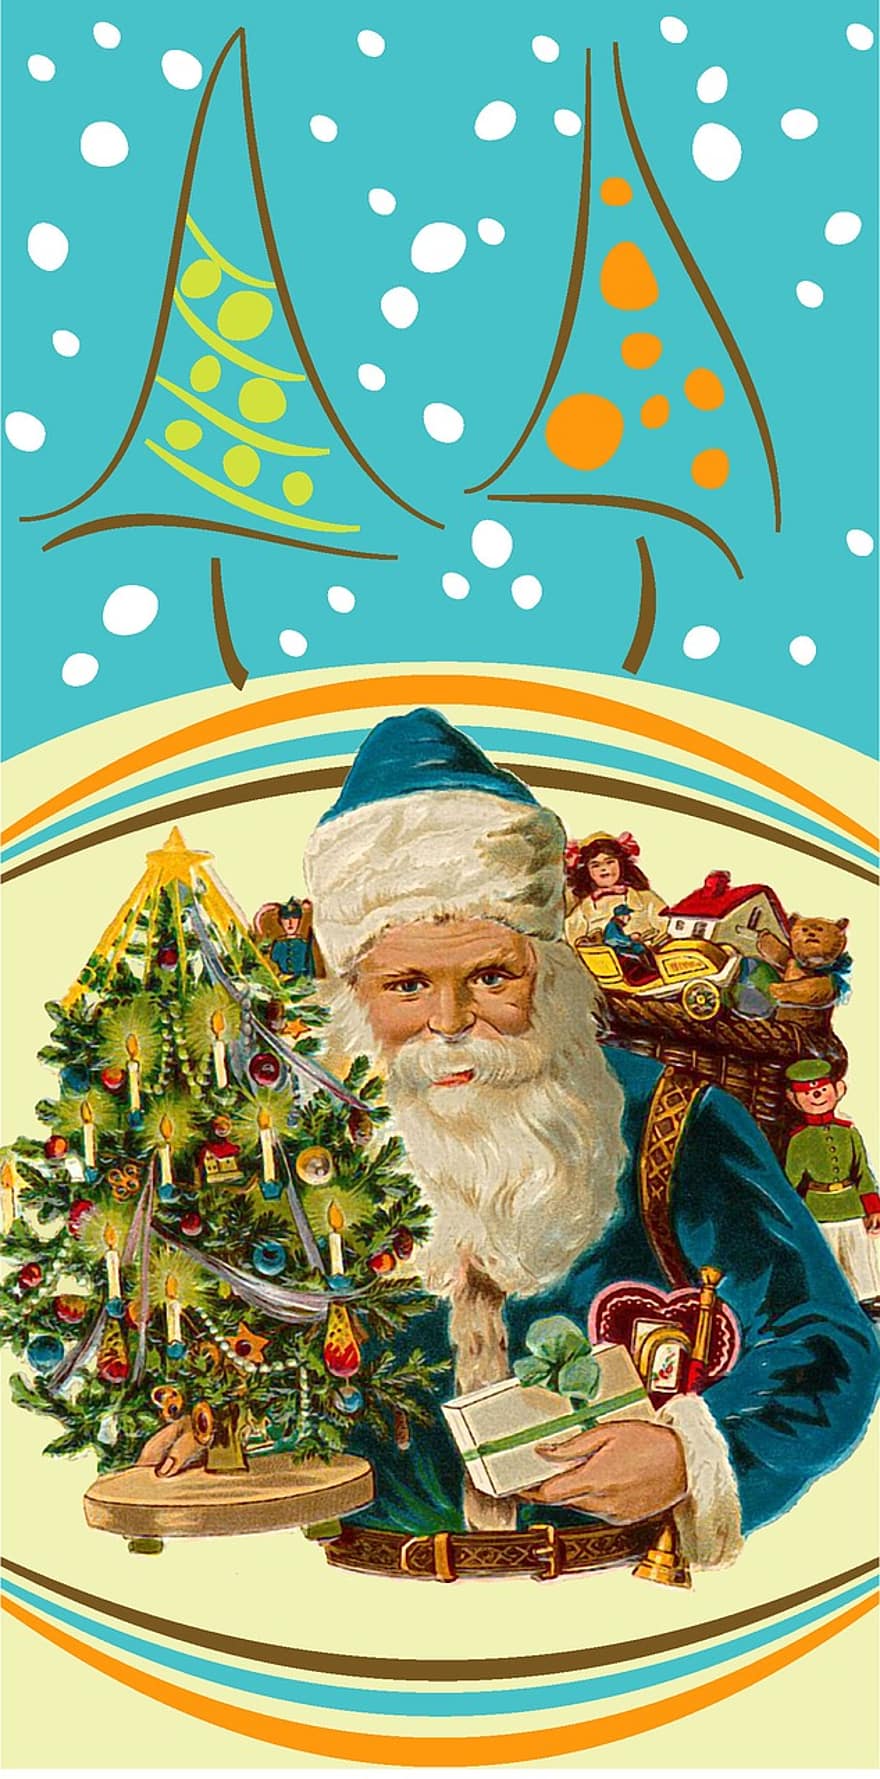 Santa Claus, Christmas Family, Parties, Merry Christmas, Noel, Christmas, Christmas Ornament, December, Present, Vintage, Pine